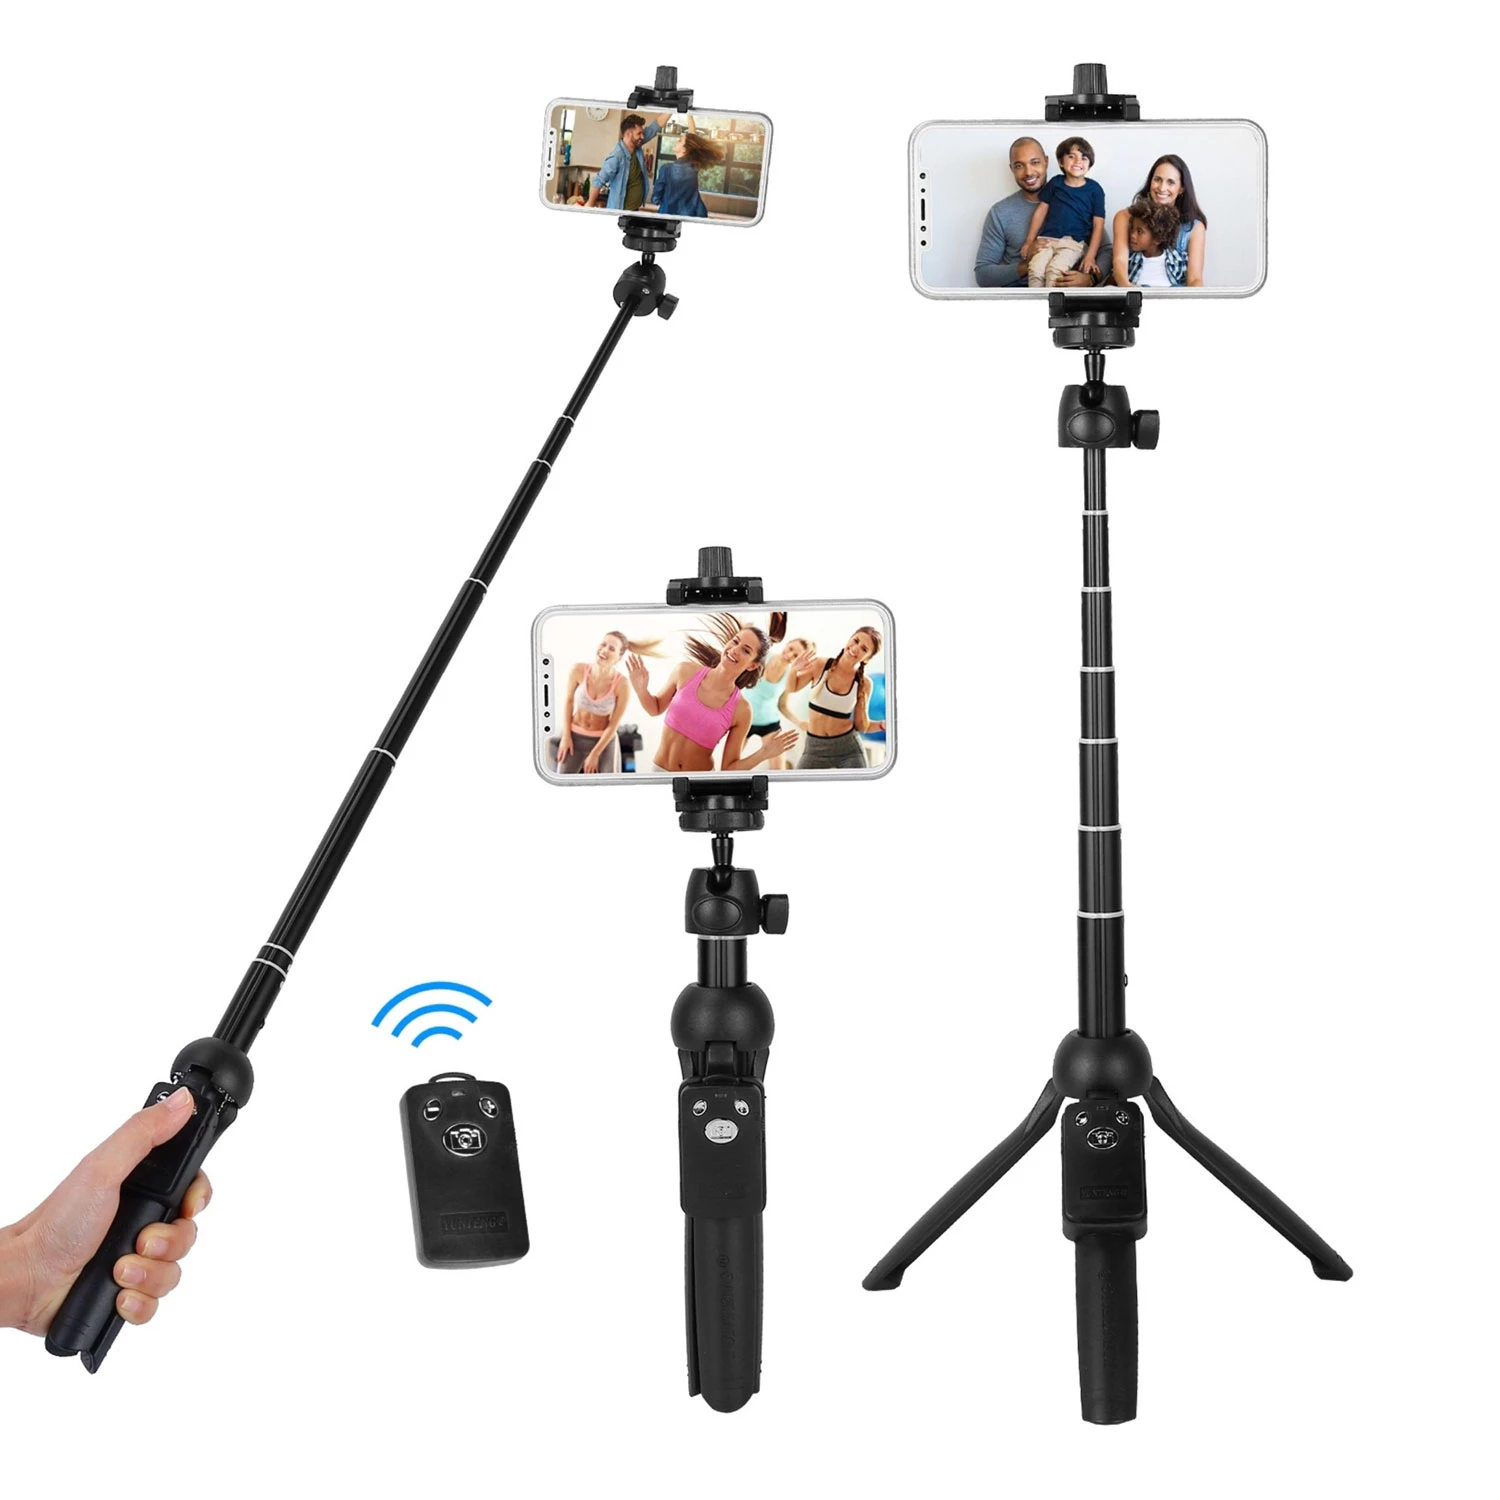 Wireless Desktop Phone Tripod: Telescopic Selfie Stick With Remote Shutter, 45in Extendable